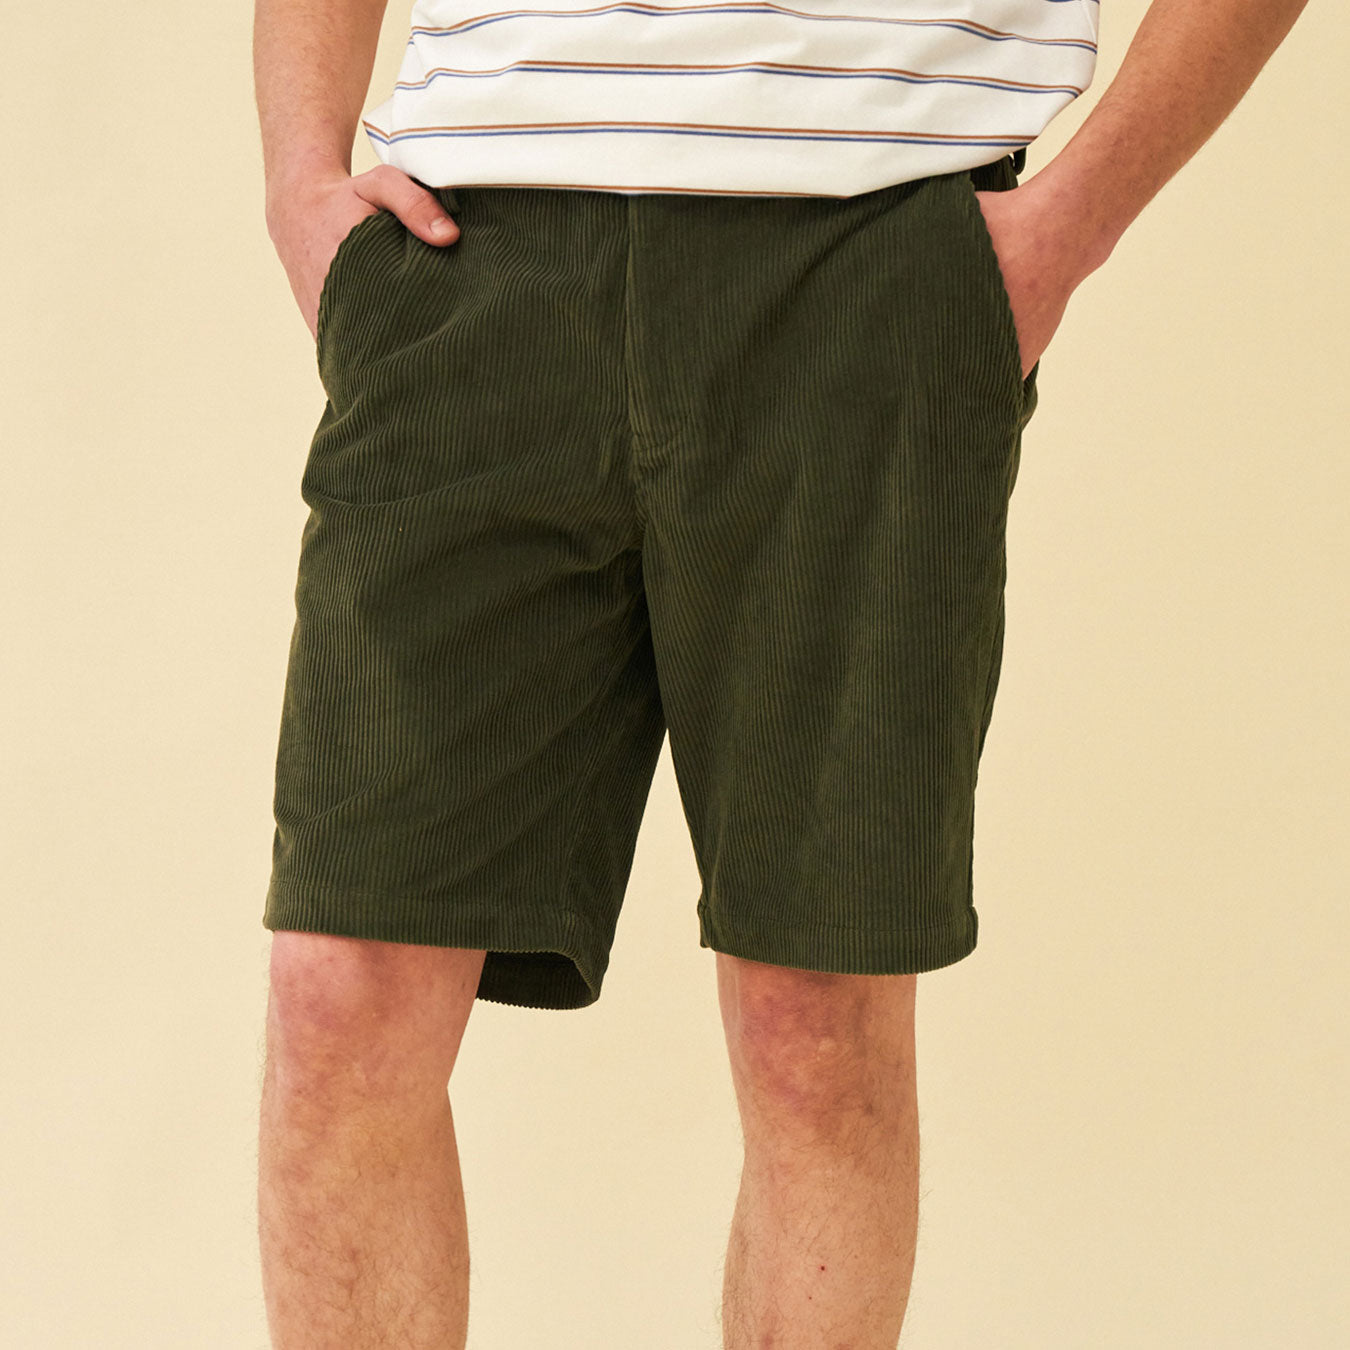 bound 'Khaki' Cord Shorts